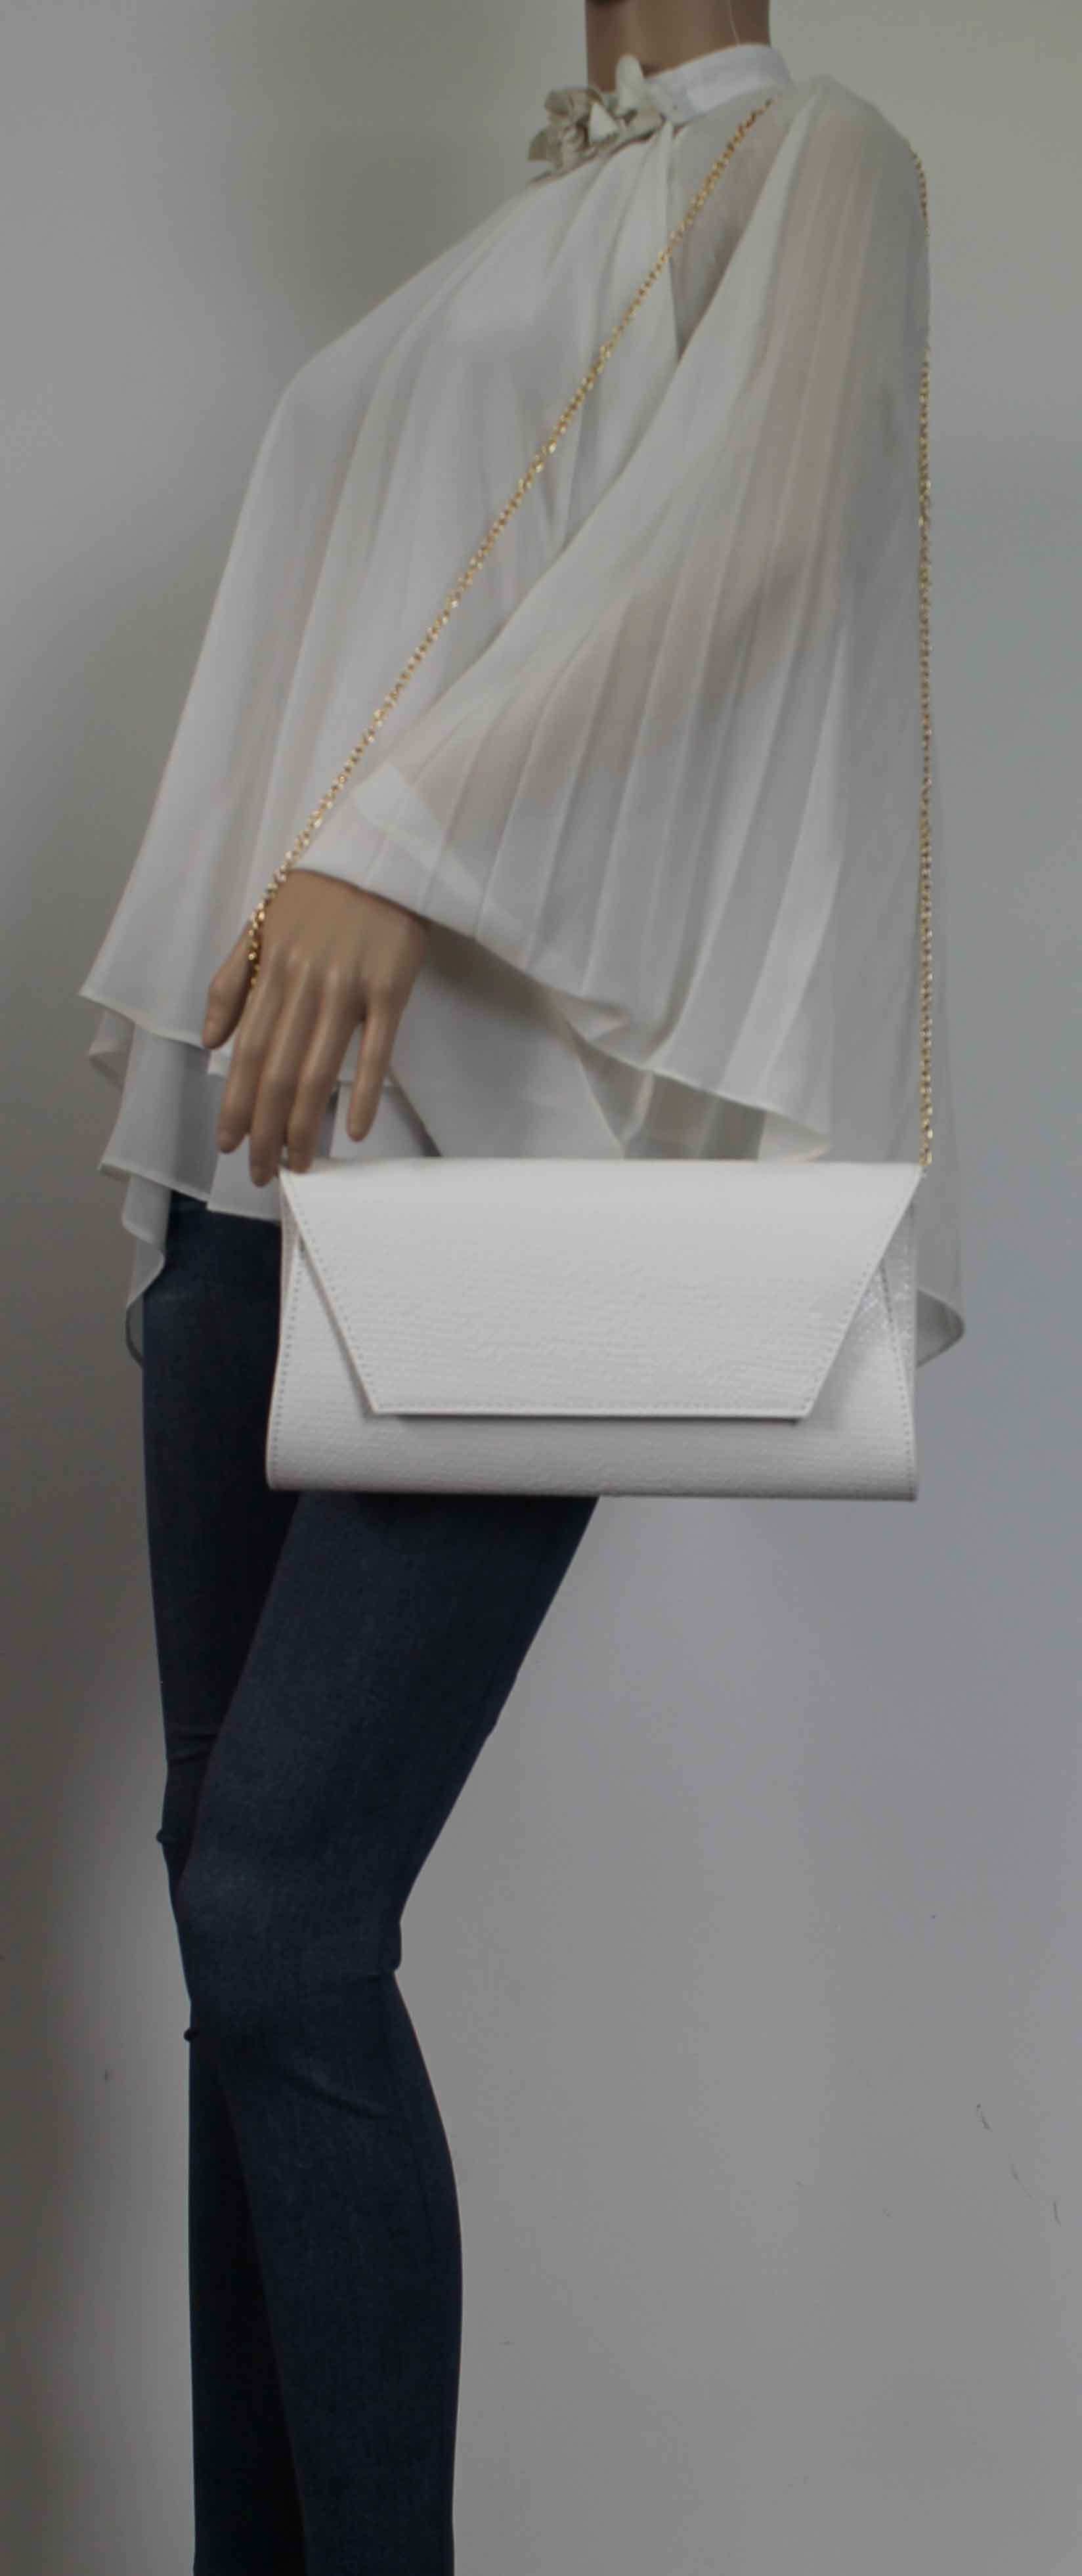 SWANKYSWANS Merci Micro Clutch Bag White Cute Cheap Clutch Bag For Weddings School and Work